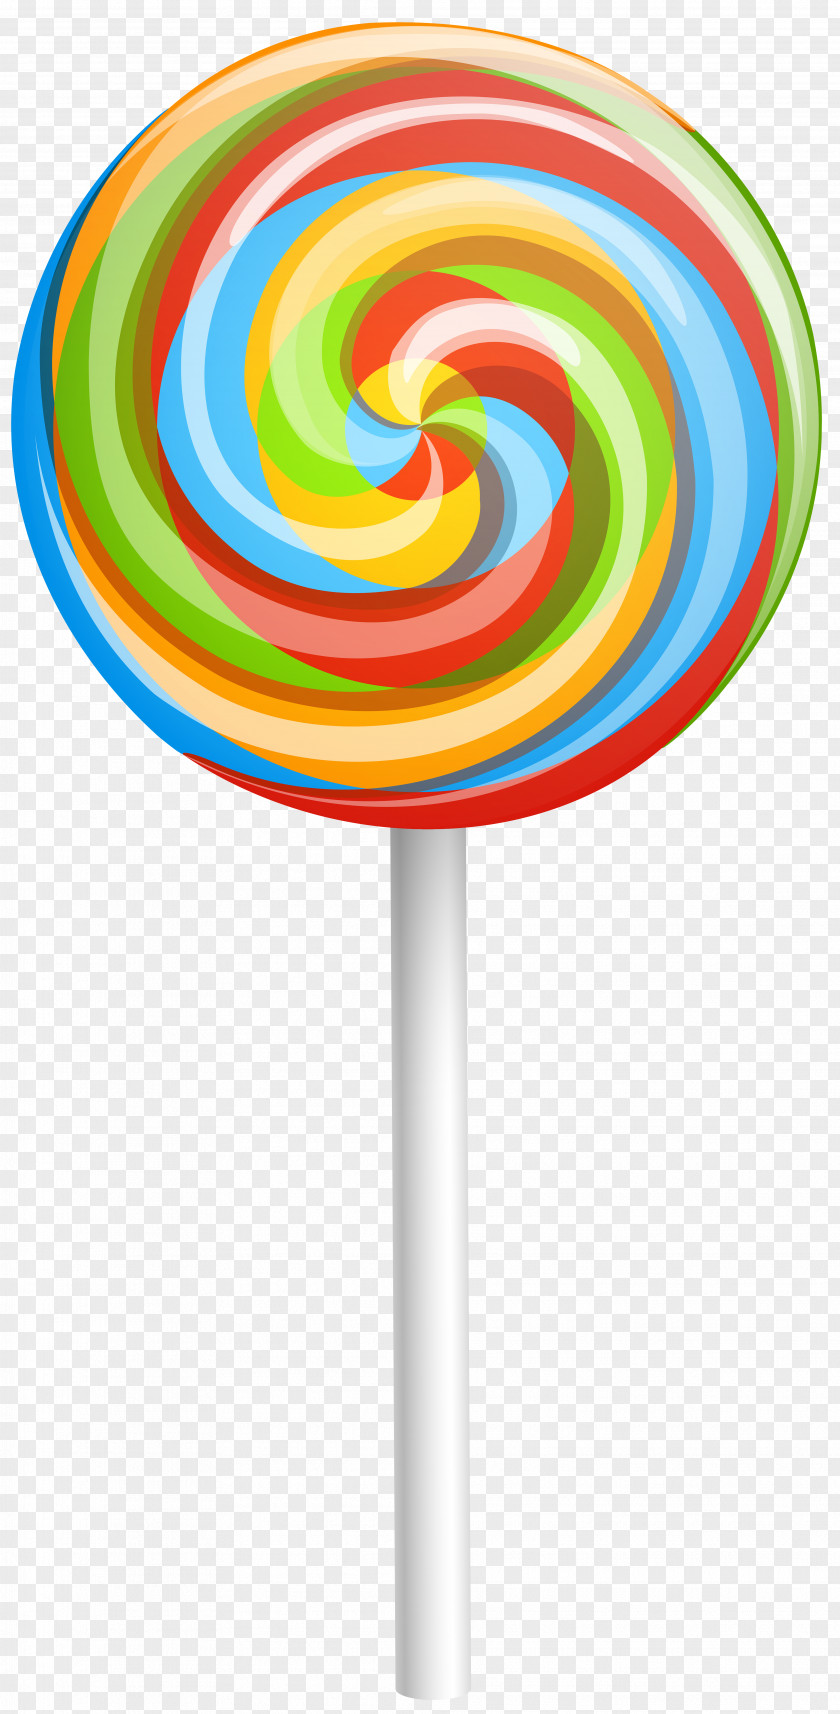 Rainbow Swirl Lollipop Clip Art Image Candy PNG